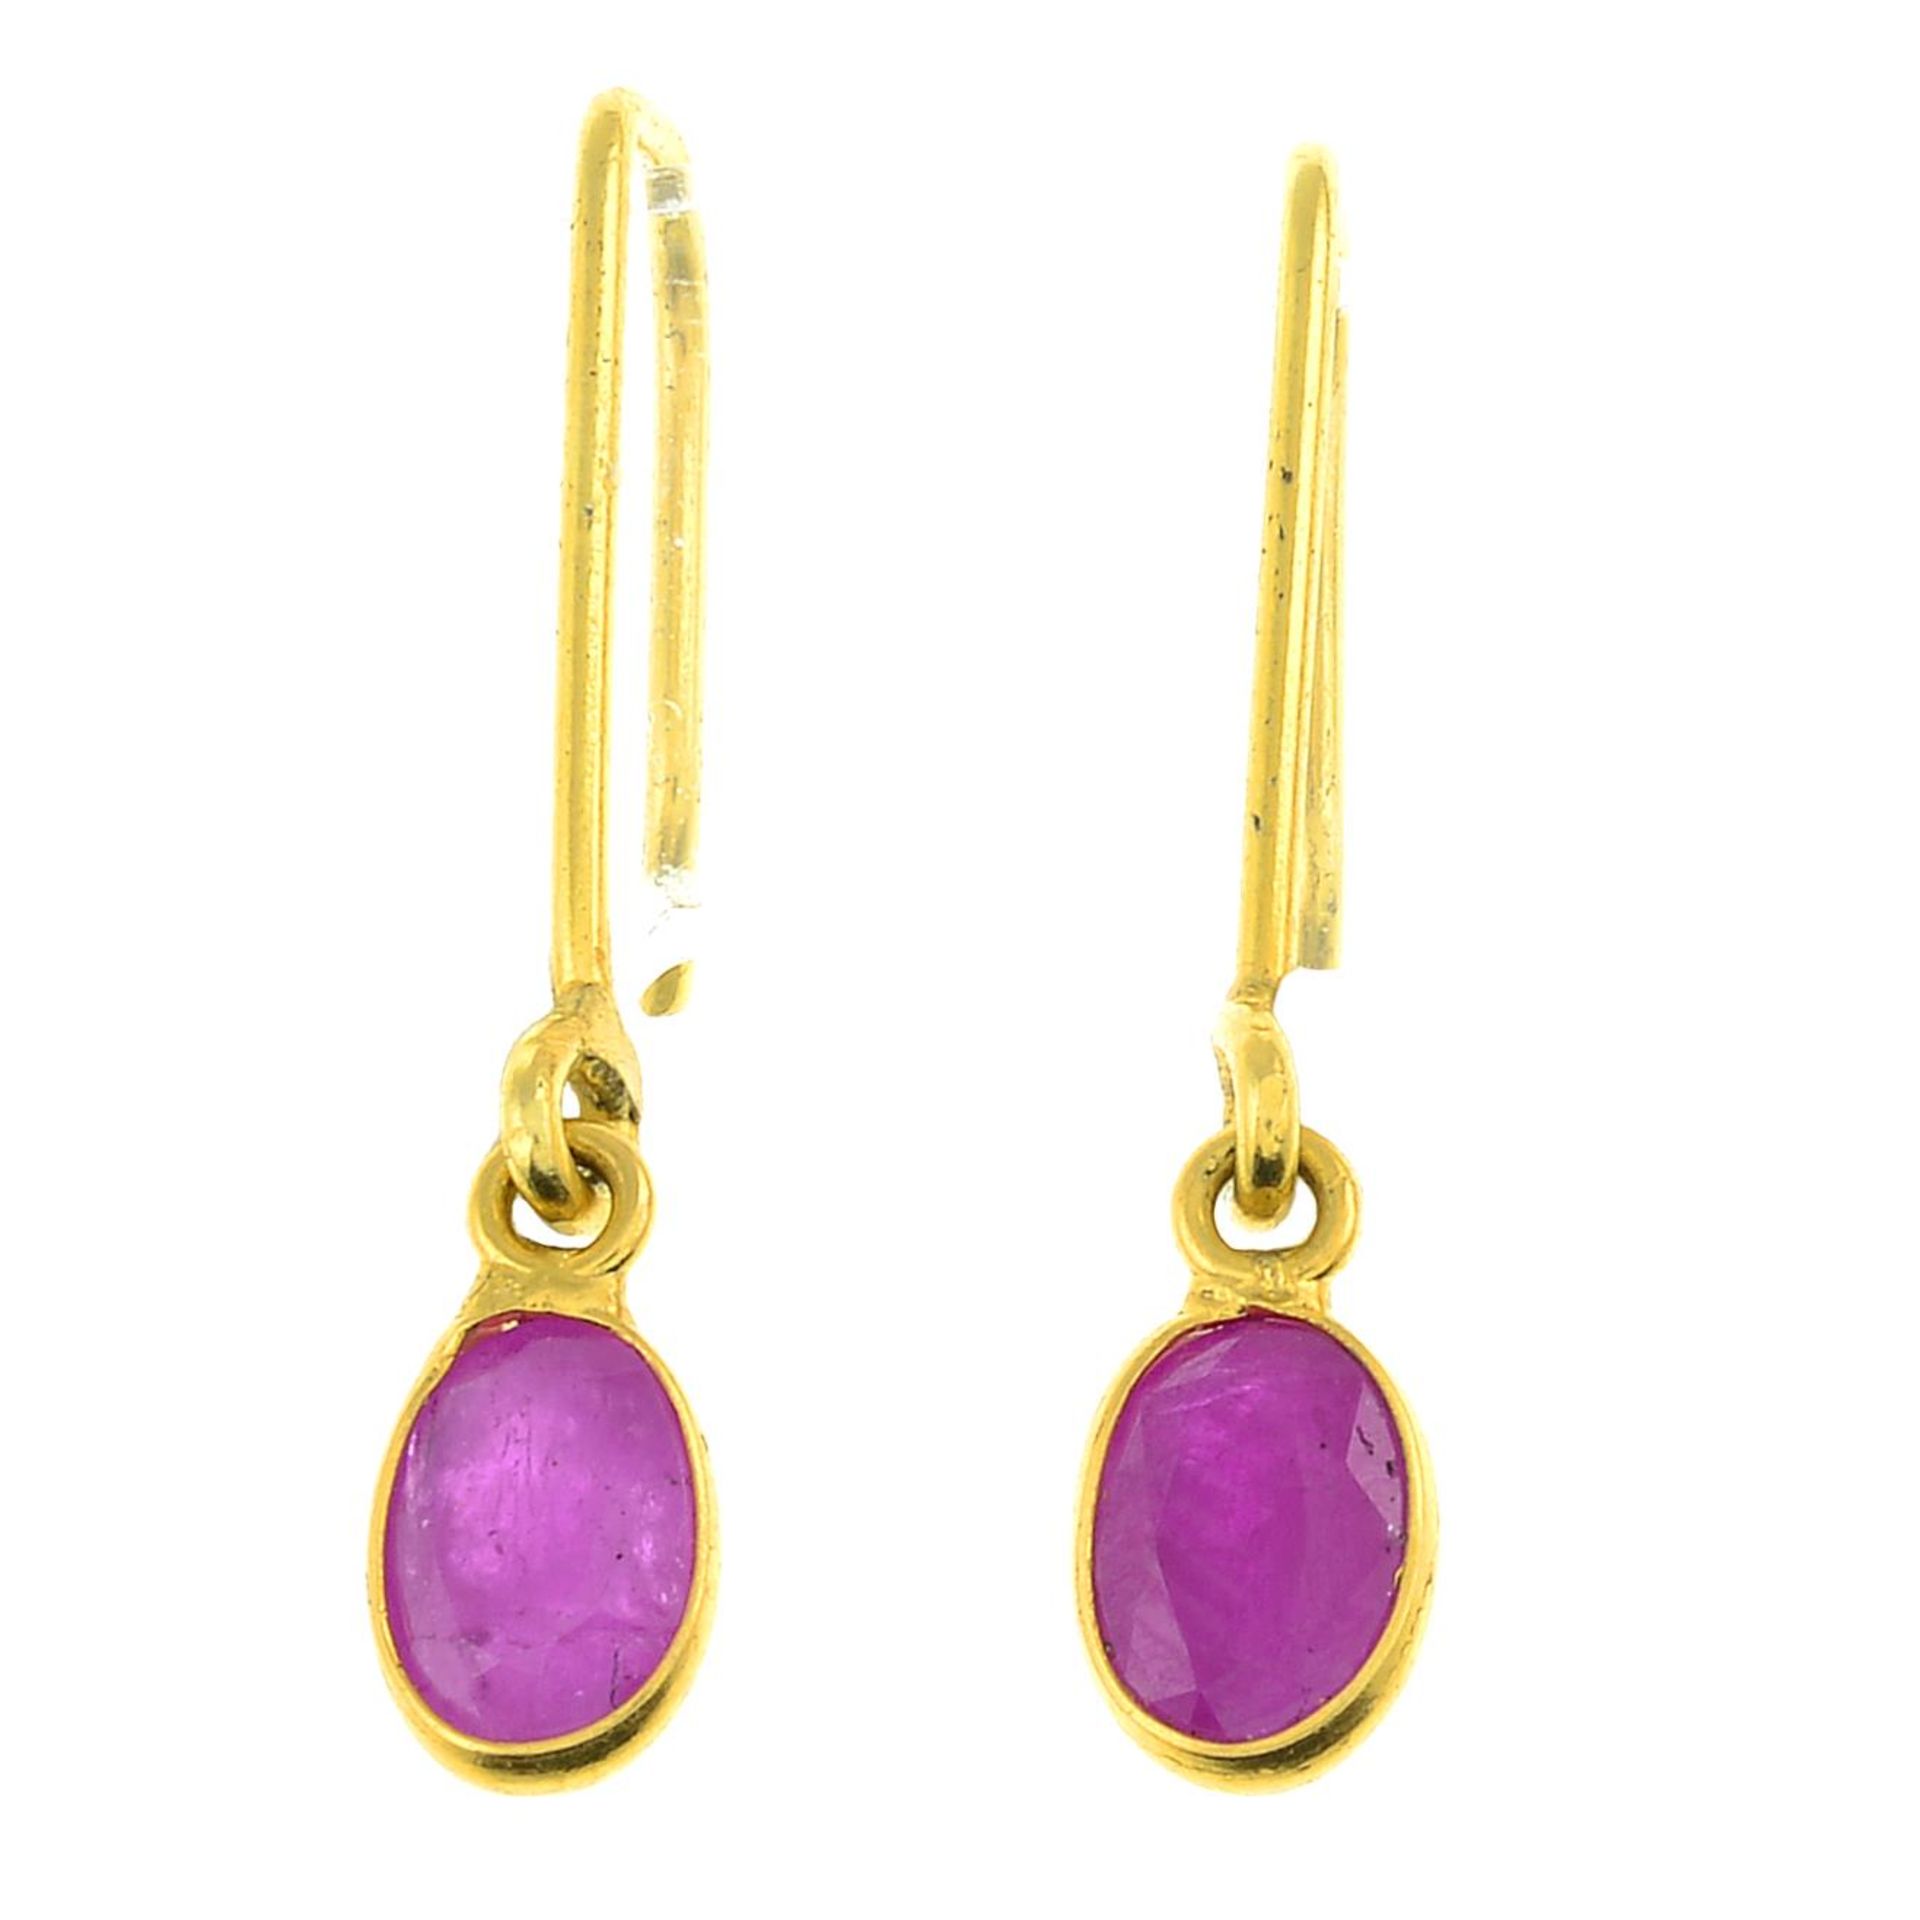 A pair of ruby earrings.Length 2.5cms.